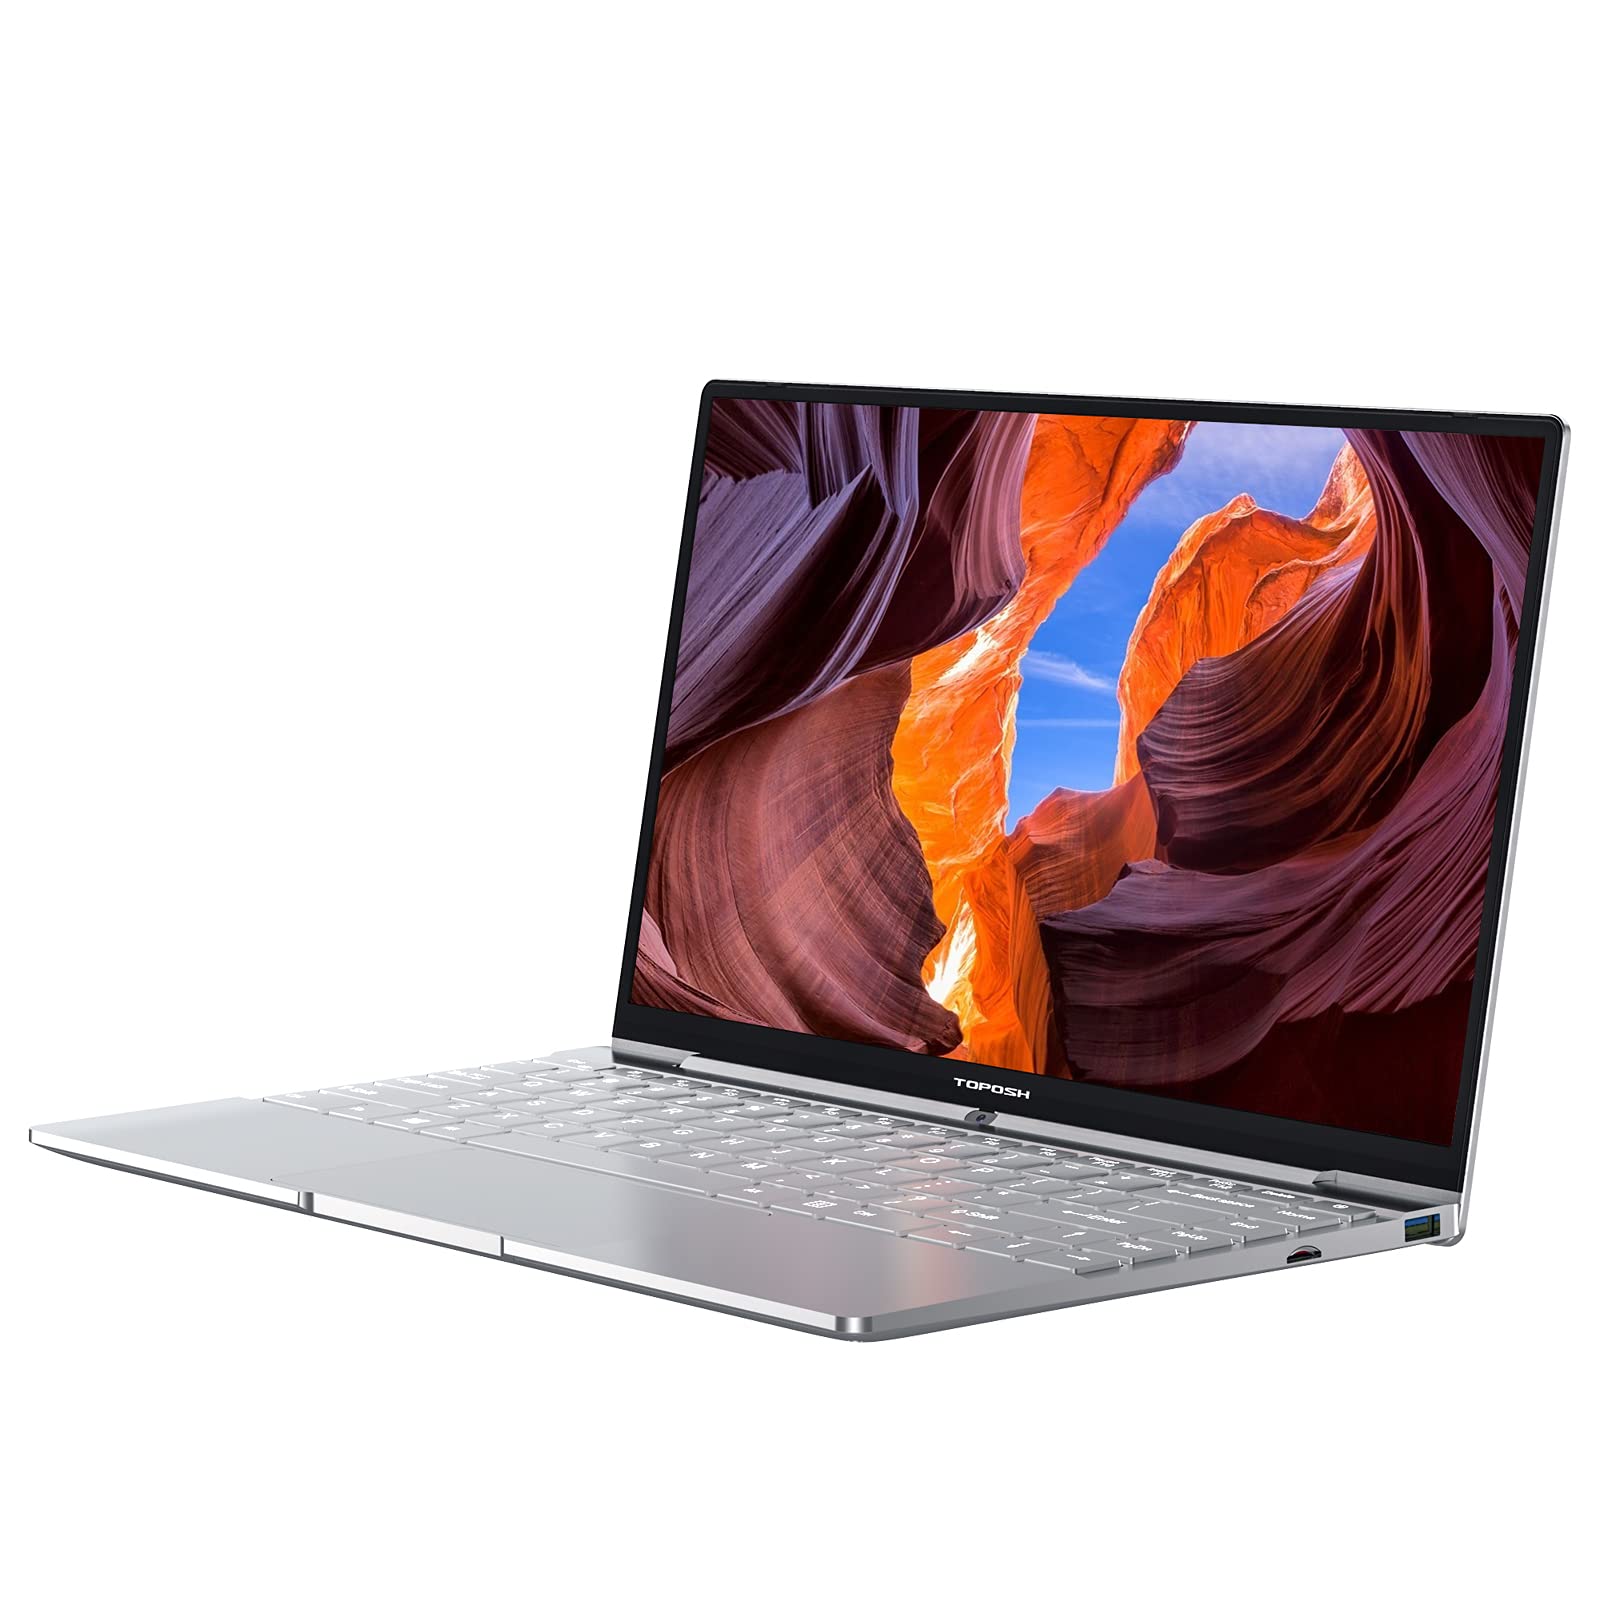 TOPOSH 14 inch Laptop,PC Notebook Computer,Windows 10 Home,12GB RAM 256GB SSD,Intel Jasper Lake N5095,Quad Core 2.0 GHz Processor,Metal Body,Backlit Keyboard-Silver